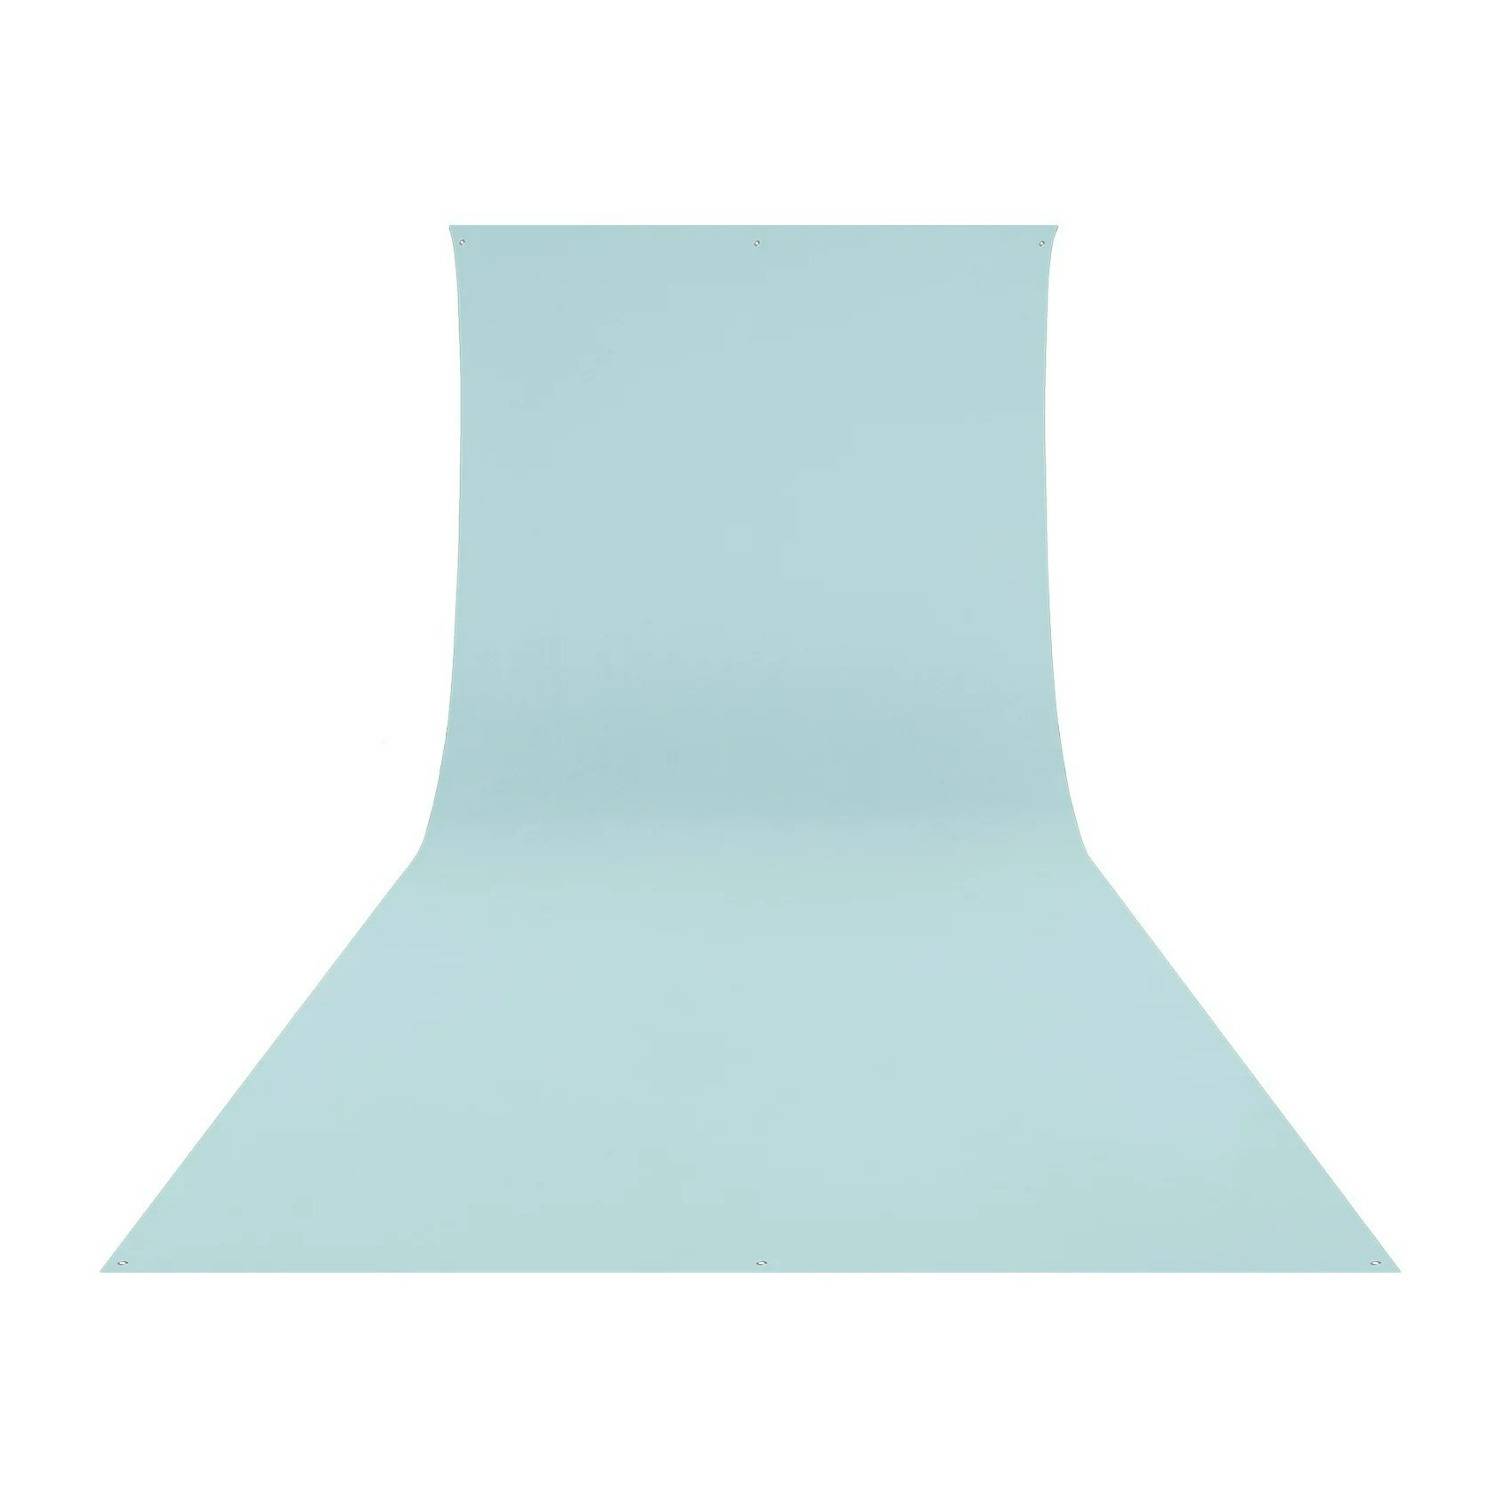 Westcott Wrinkle-Resistant, Machine-Washable Backdrop (Pastel Blue, 9 x 10 Feet)